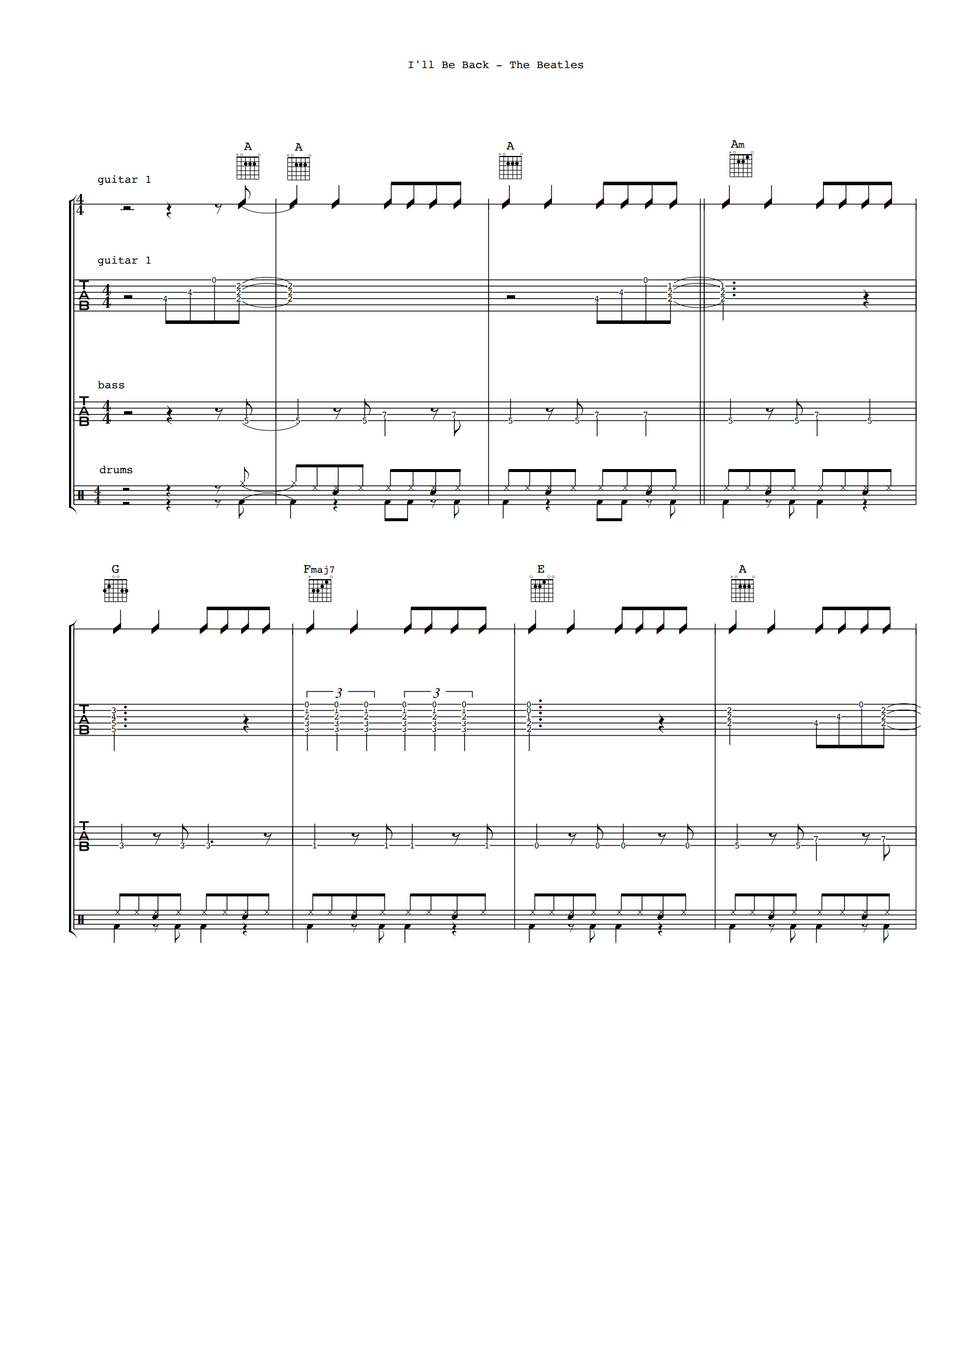 The Beatles - I'll Be Back (Band Score) by Ryohei Kanayama